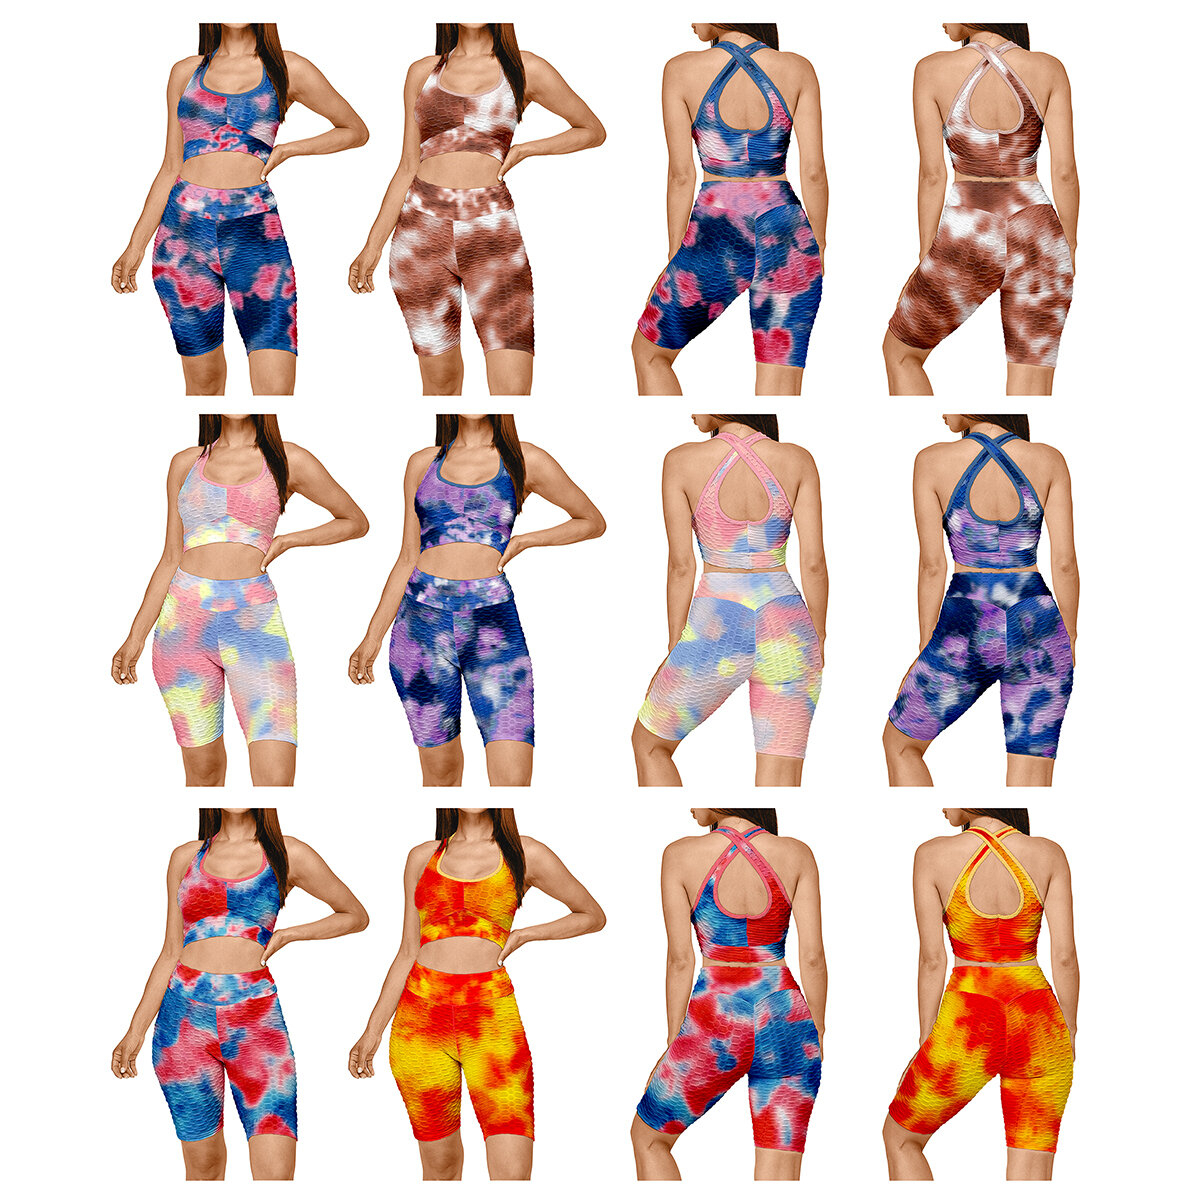 Women's Anti Cellulite Sports Bra & High Waisted Biker Shorts Workout Yoga Set - Tie-dye, Small